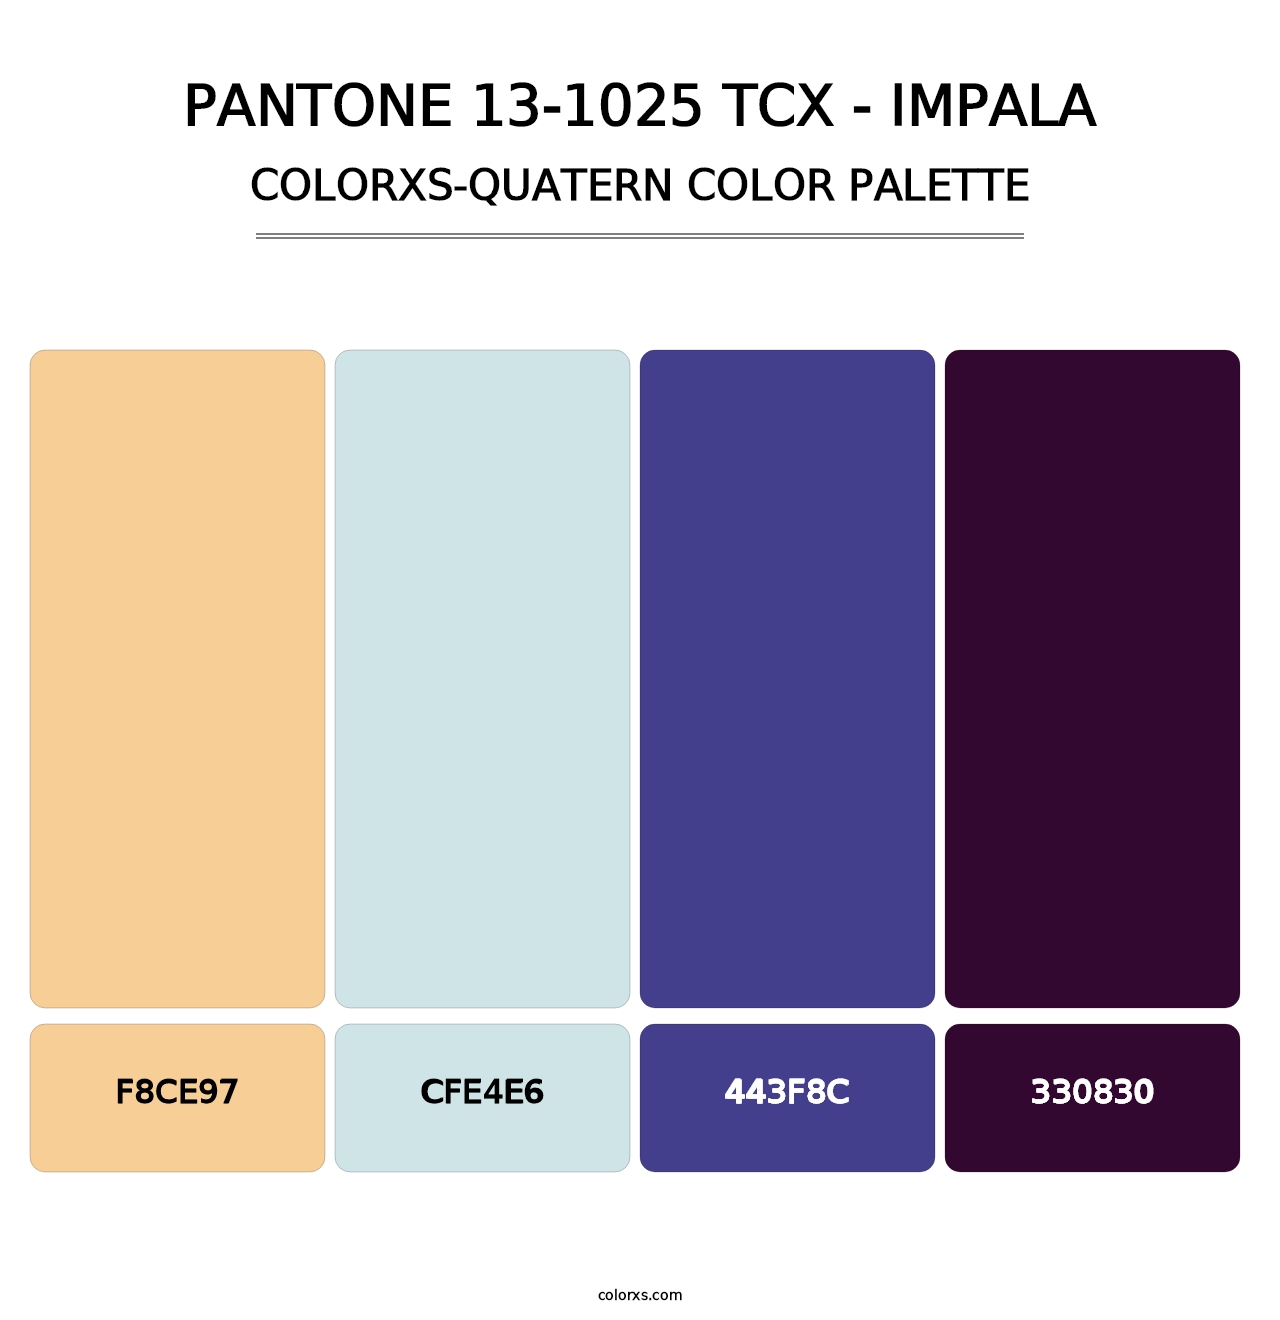 PANTONE 13-1025 TCX - Impala - Colorxs Quatern Palette